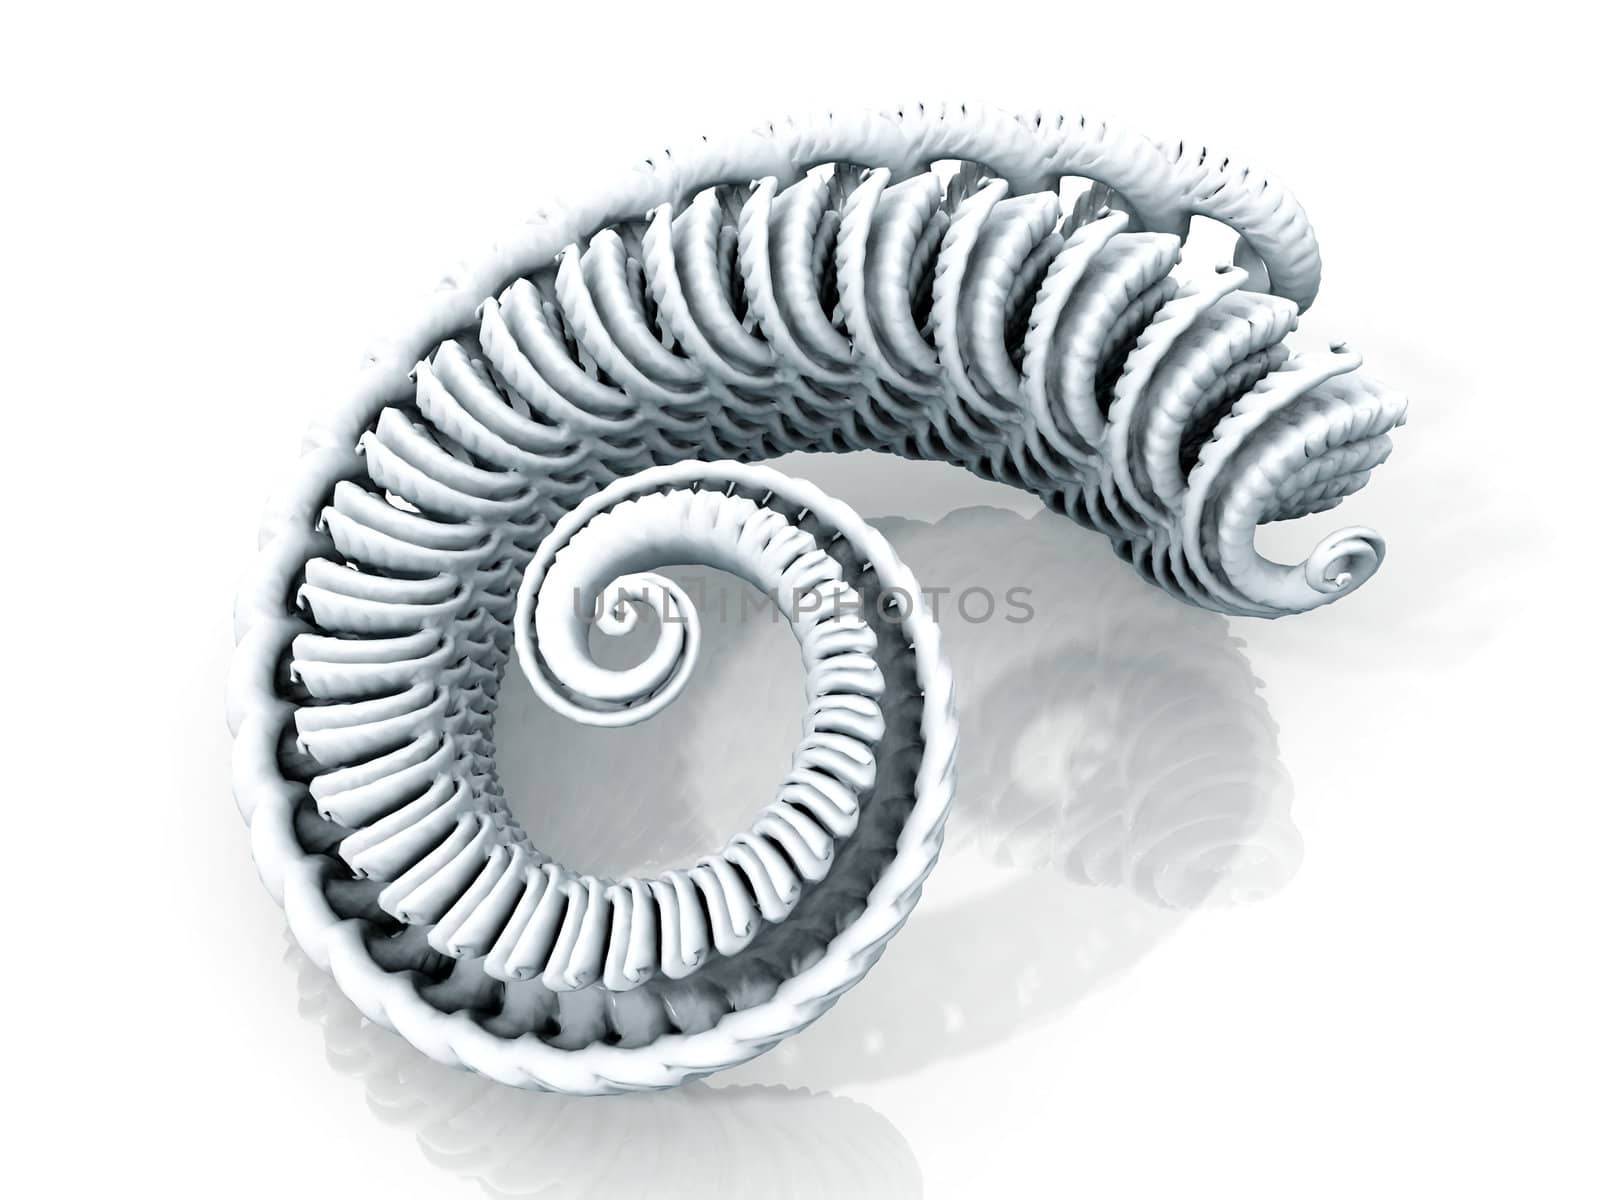 spiral of mollusc by njaj